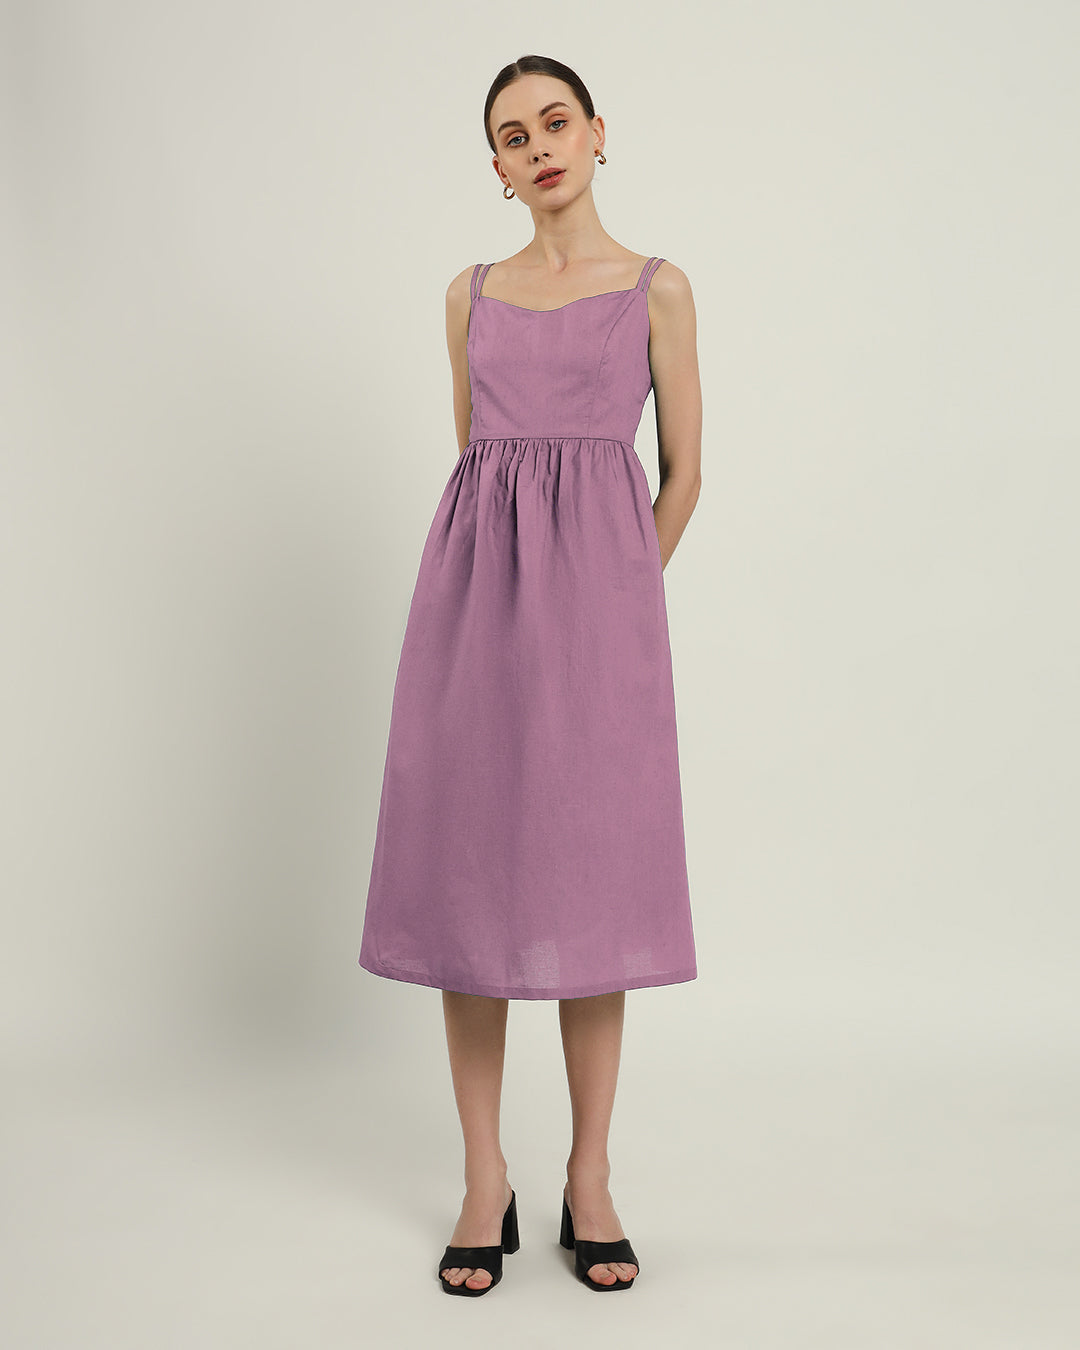 The Haiti Purple Swirl Cotton Dress